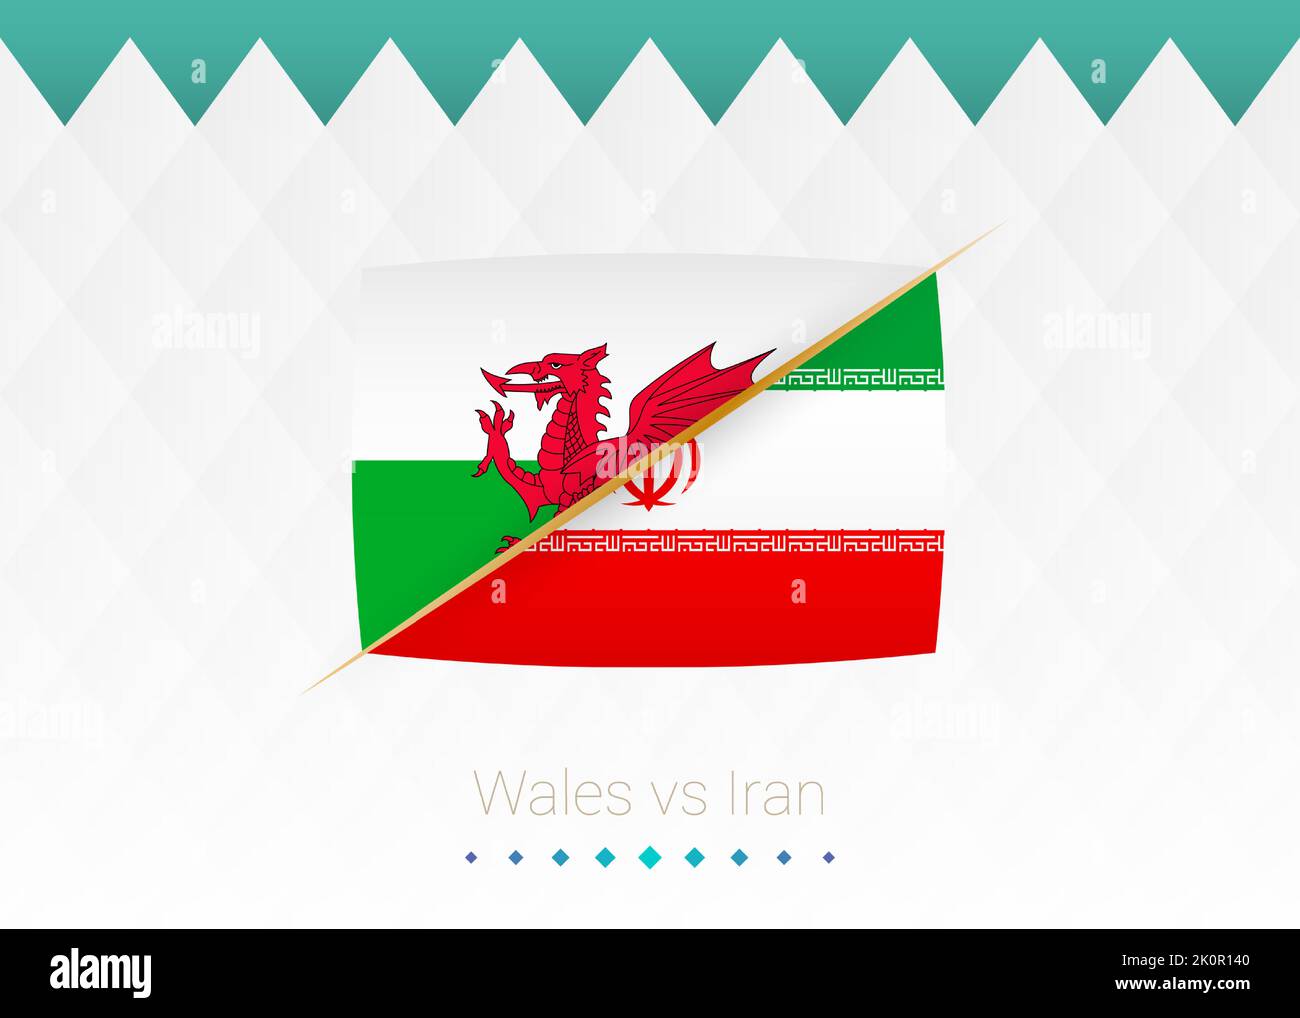 National football team Wales vs Iran. Soccer 2022 match versus icon. Vector illustration. Stock Vector